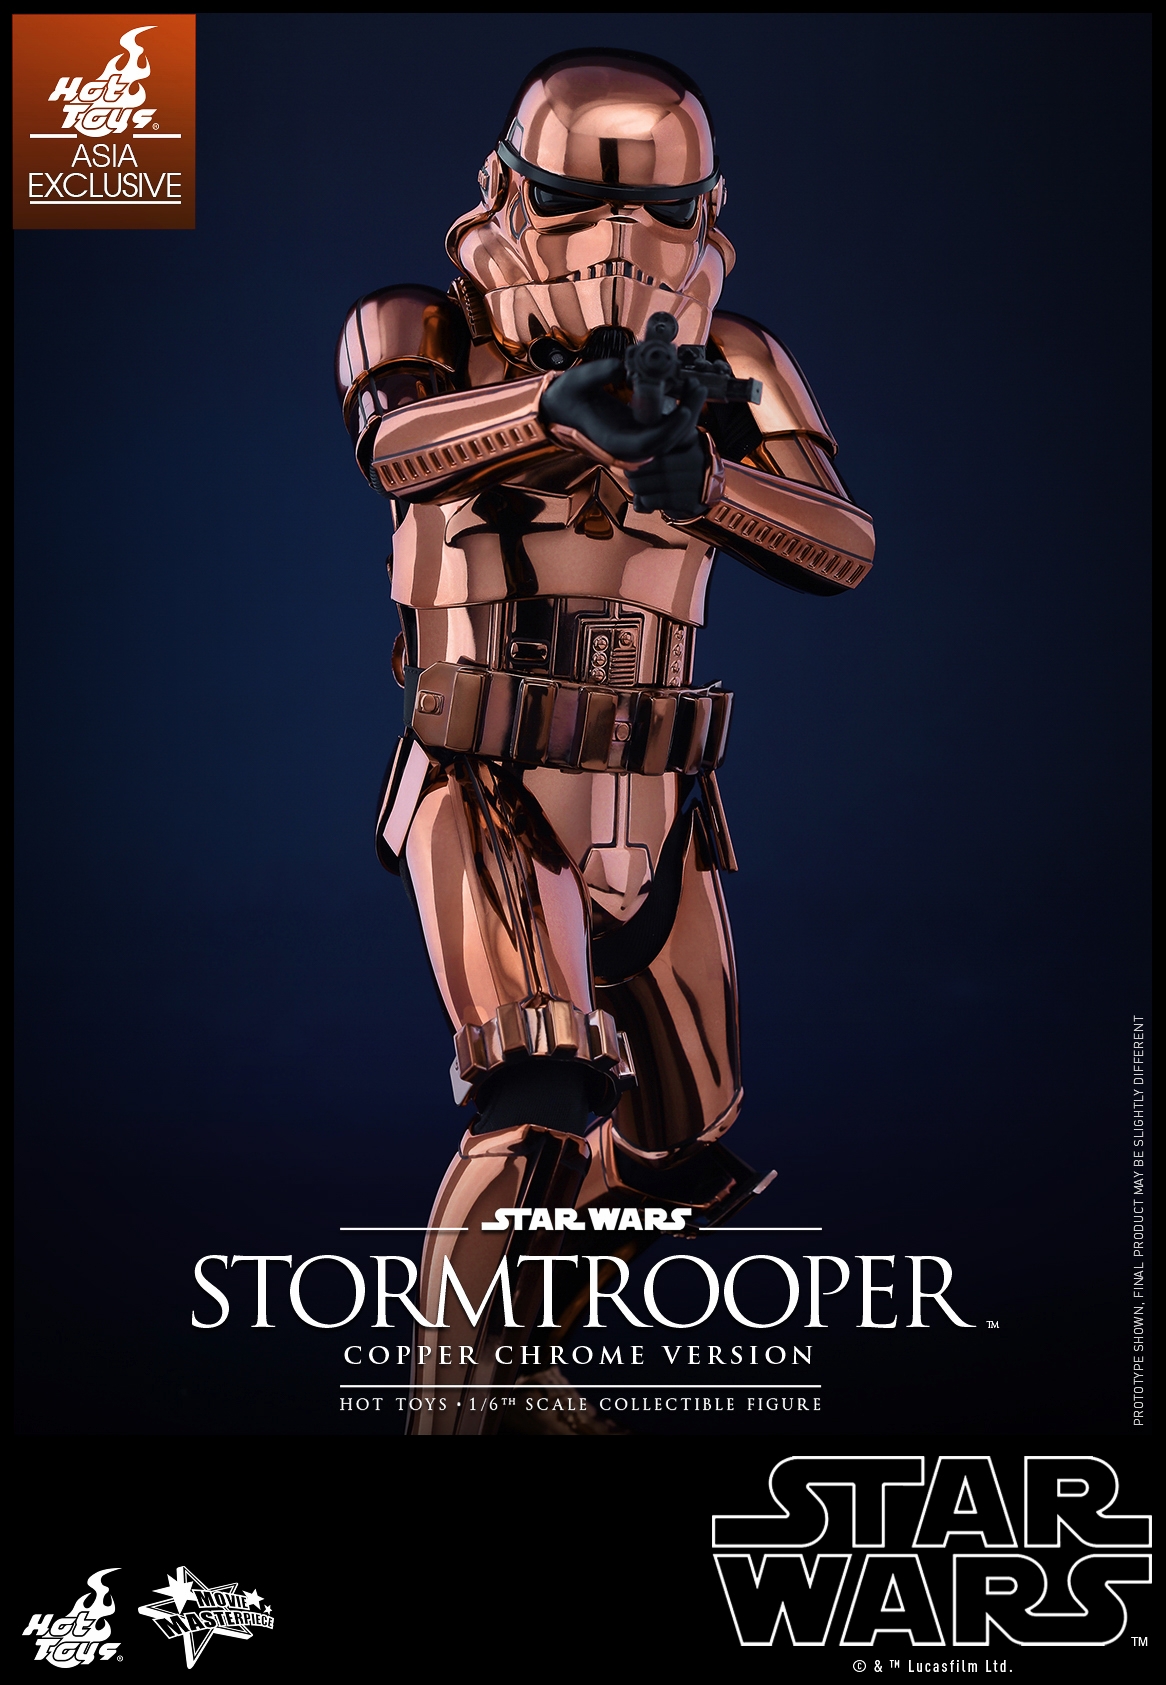 Hot-Toys-Stormtrooper-Copper-Chrome-Version-MMS330-009.jpg